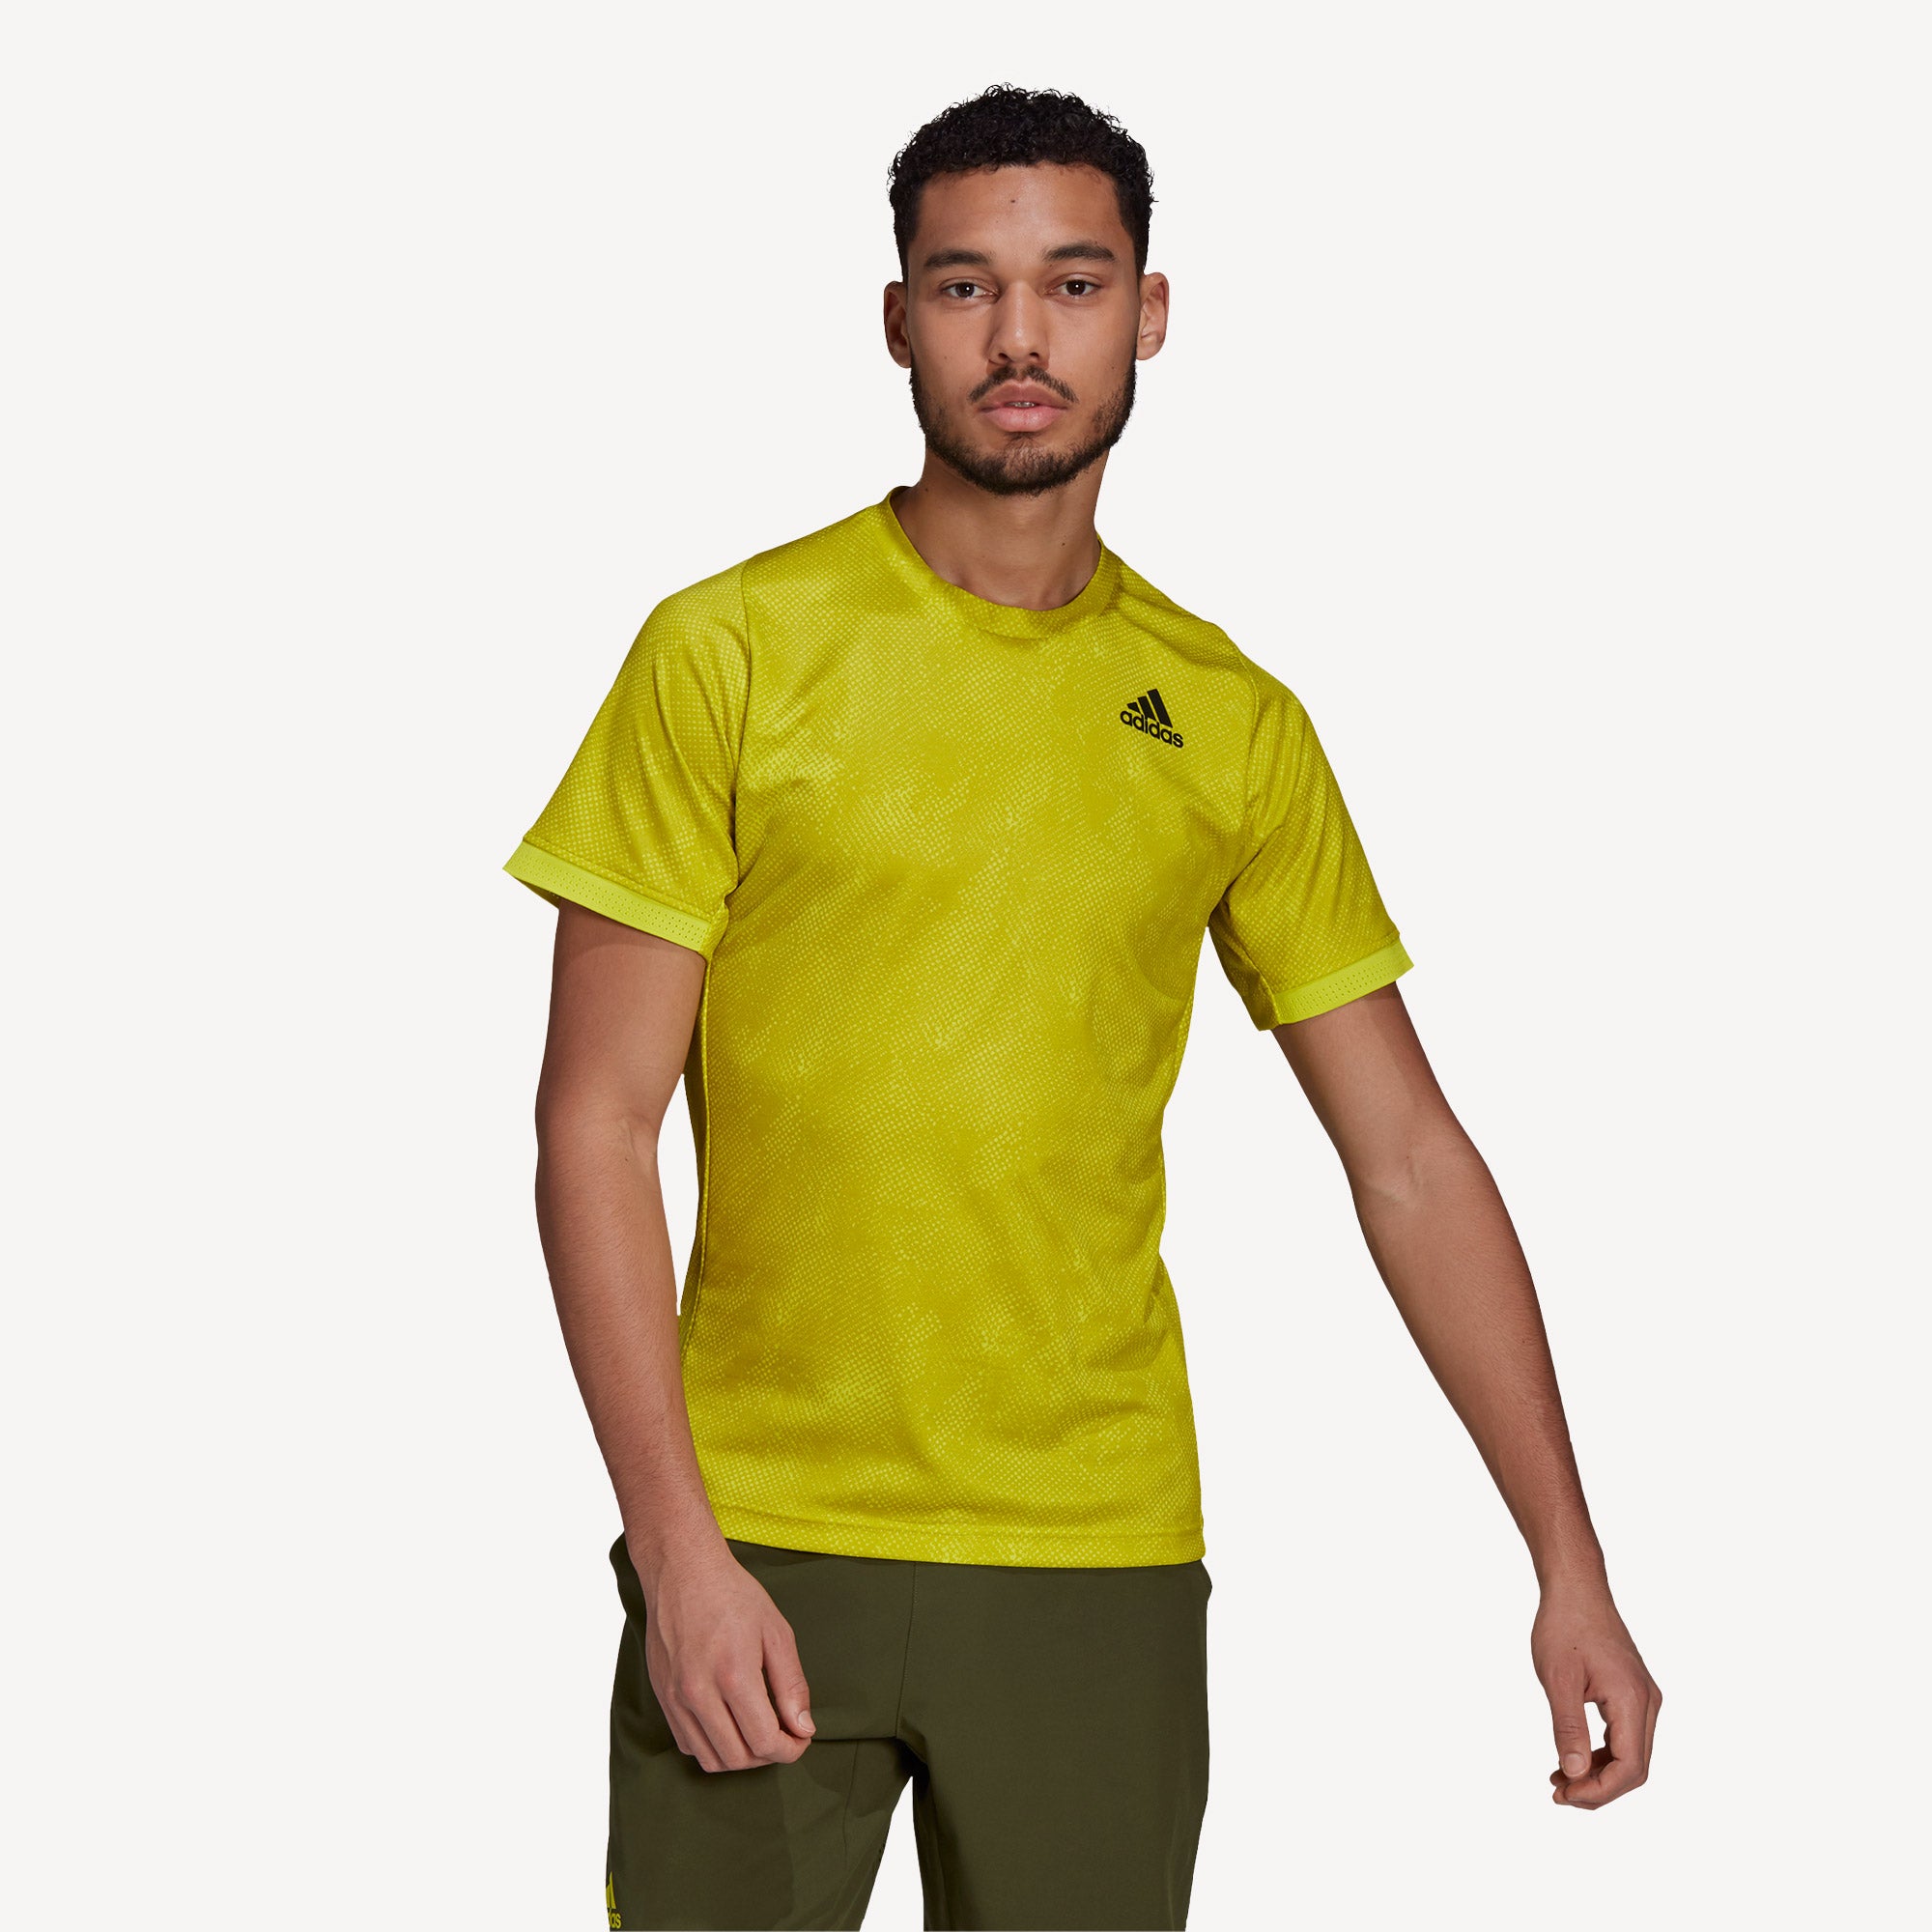 adidas Freelift Primeblue Men's Printed Tennis Shirt Yellow (1)